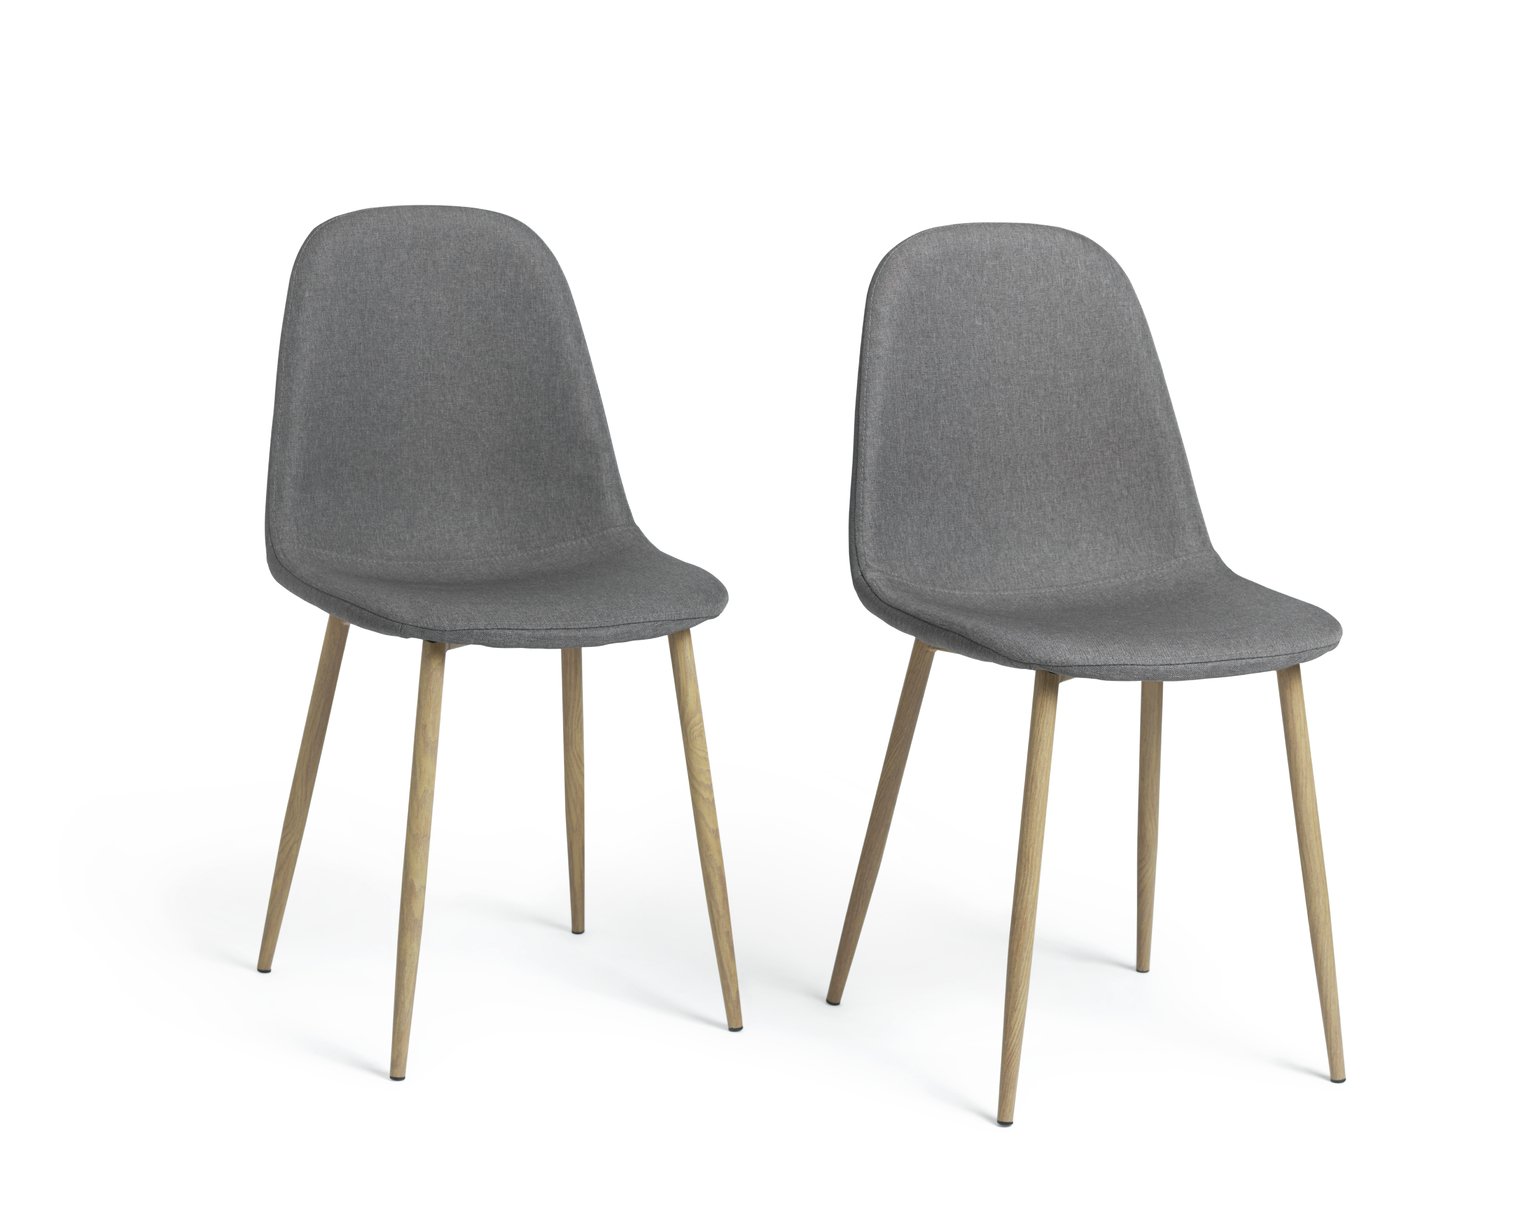 Habitat Beni Pair of Fabric Chairs - Grey